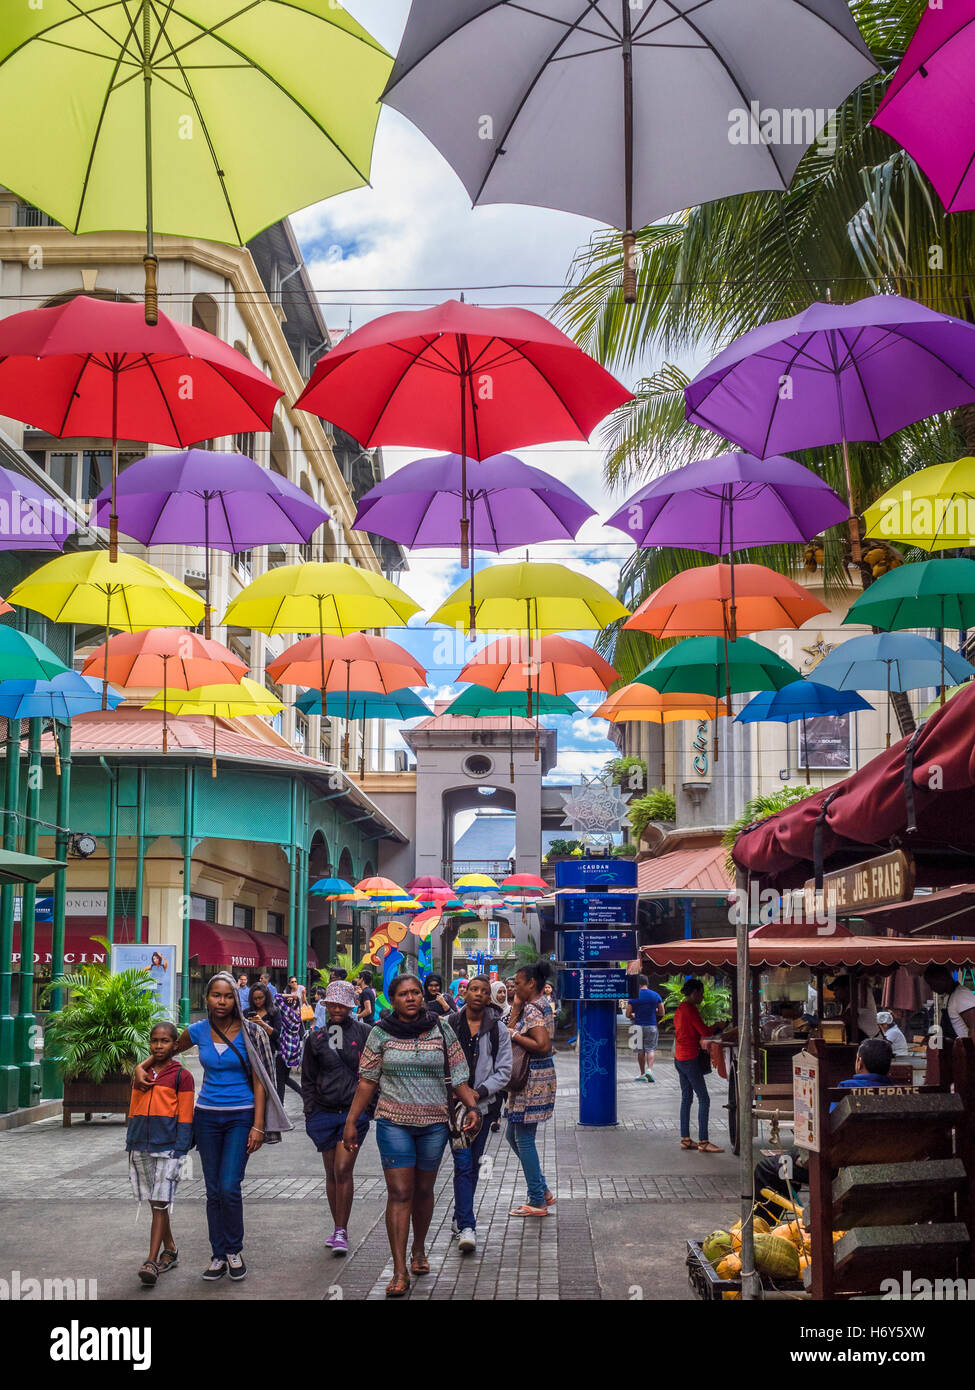 Umbrella art display in street at Caudan Waterfront, Port Luis, Mauritius Stock Photo